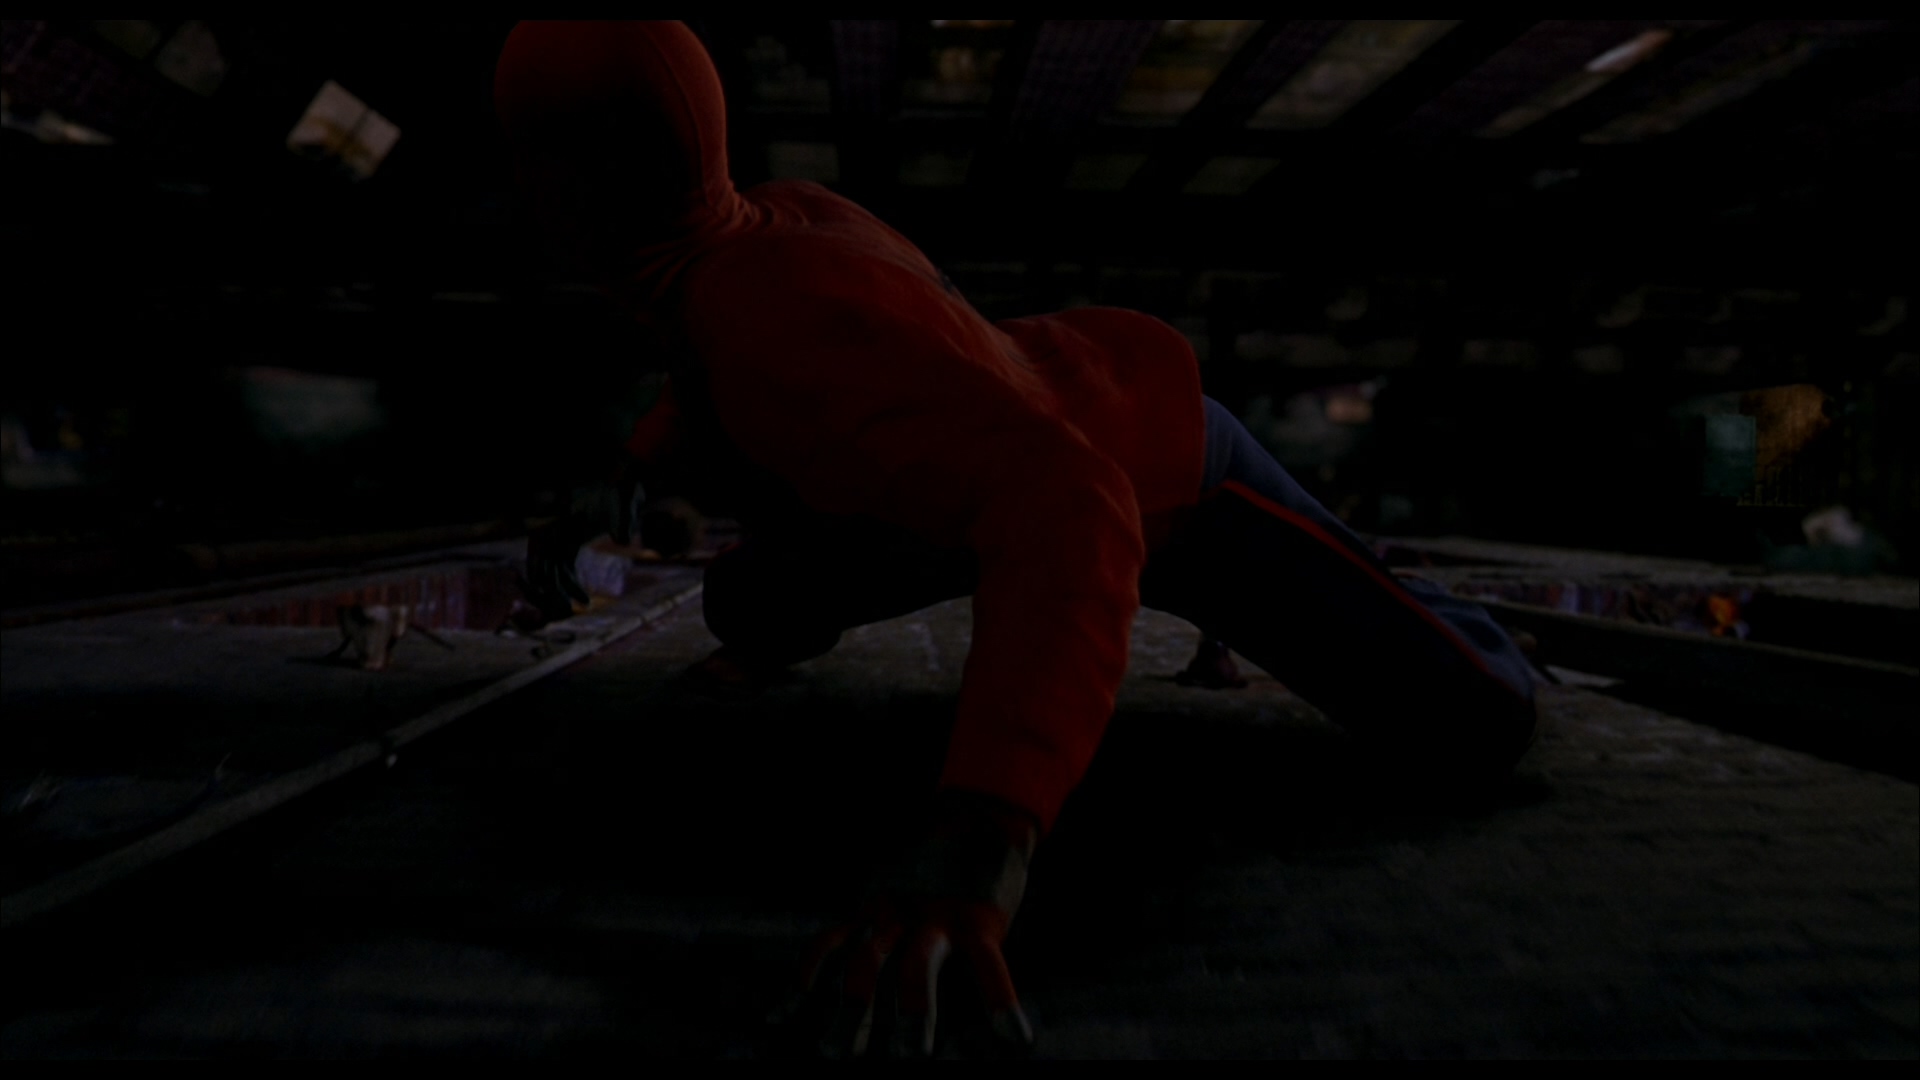 [蜘蛛侠1].Spider-Man.I.2002.CHN.BluRay.1080p.AVC.DTS-HD.MA.5.1-HDBiger   42.31G( ]+ g* K. k$ h6 ?-6.jpg